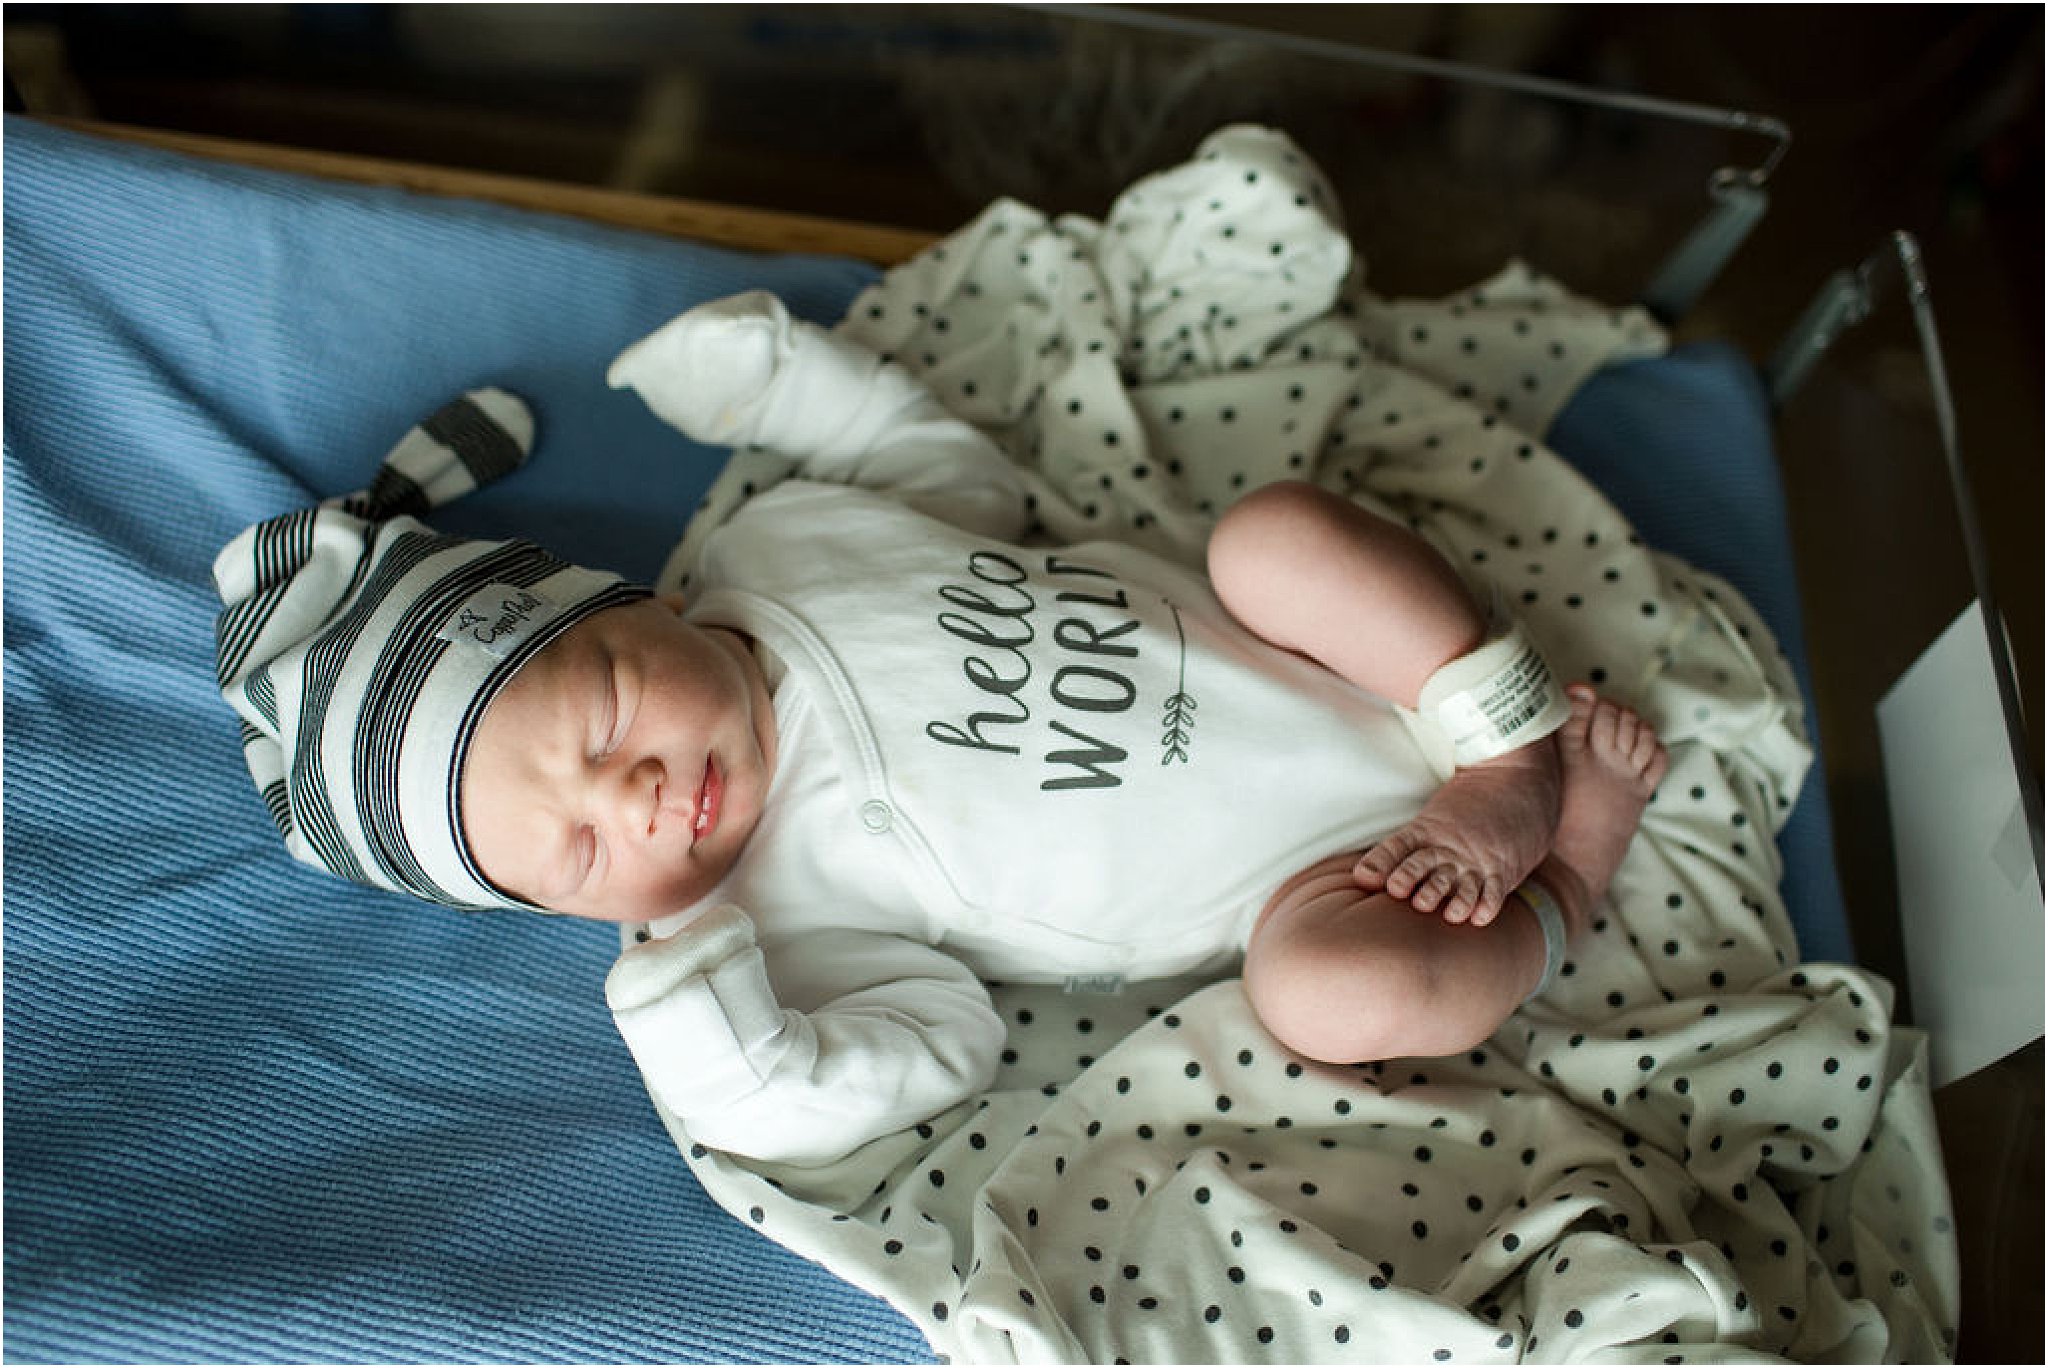 chubby newborn baby boy with striped hat